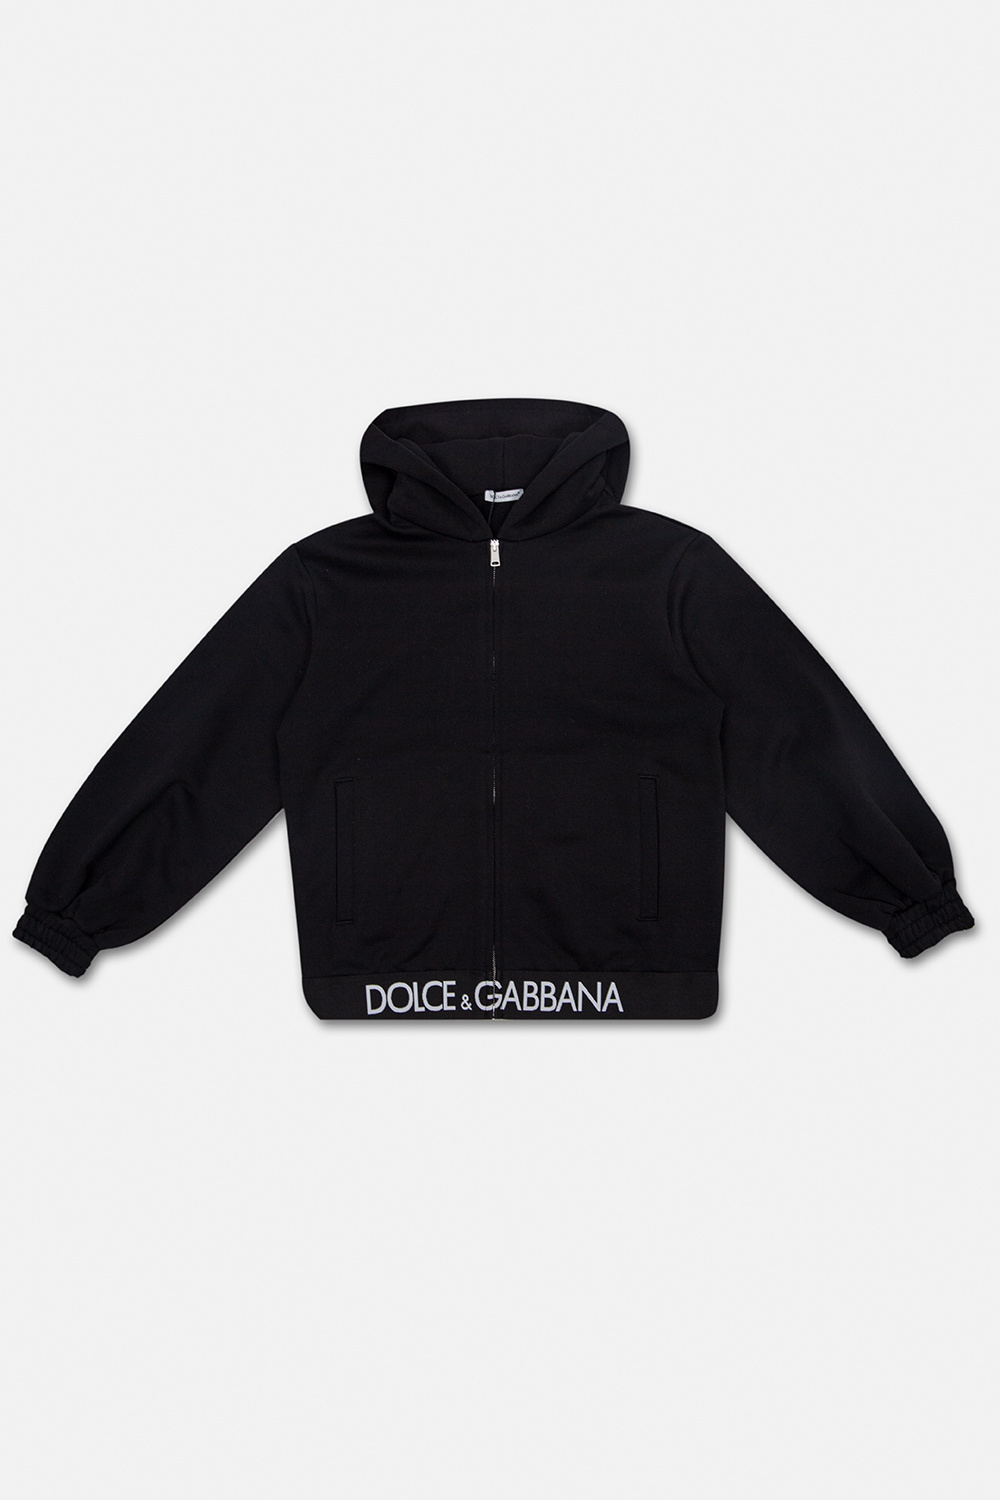 Dolce & Gabbana Black Zip-up hoodie